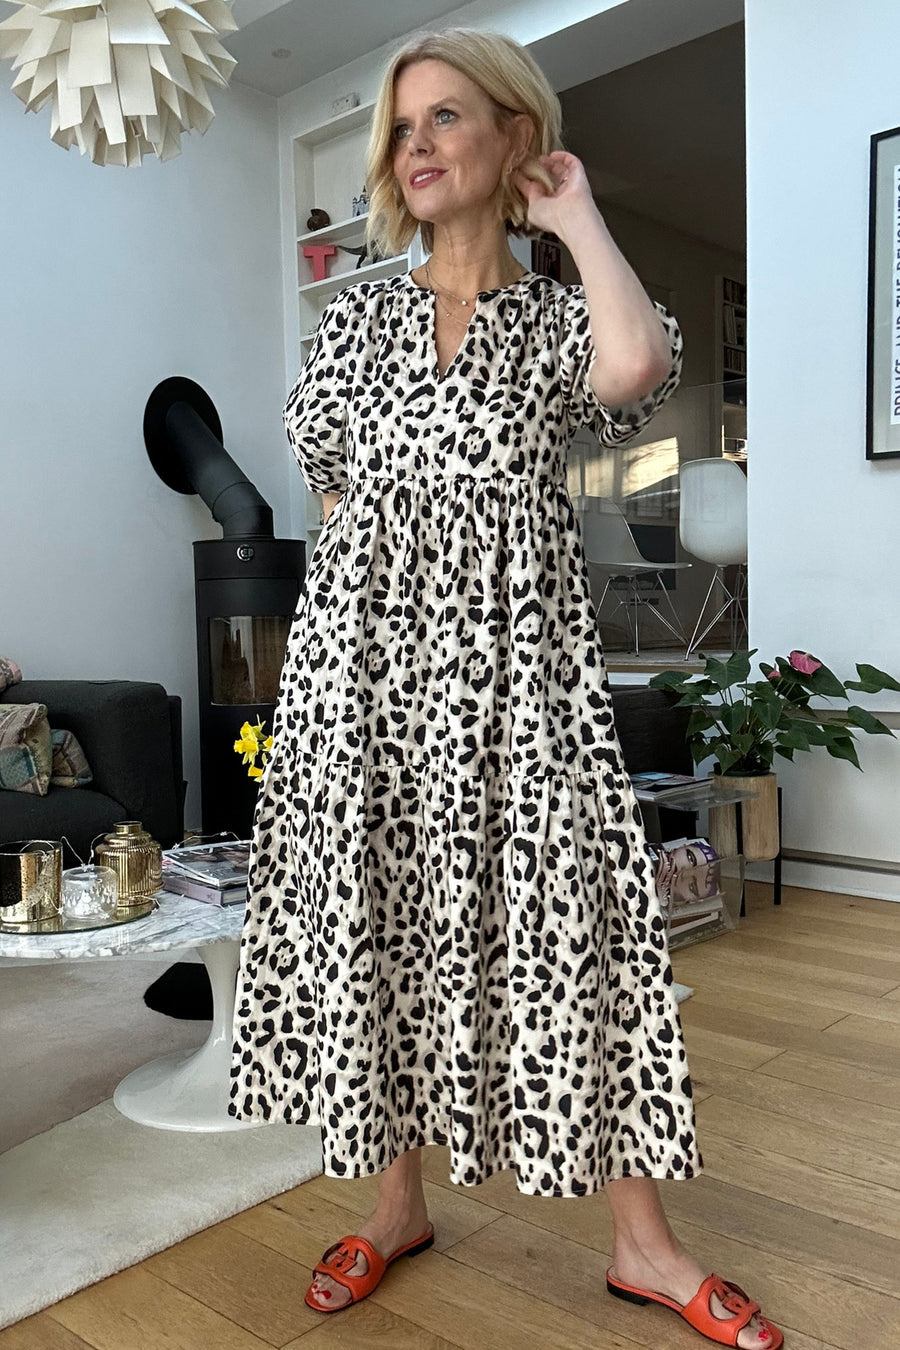 Serena Leopard Dress - Leopard - Regular